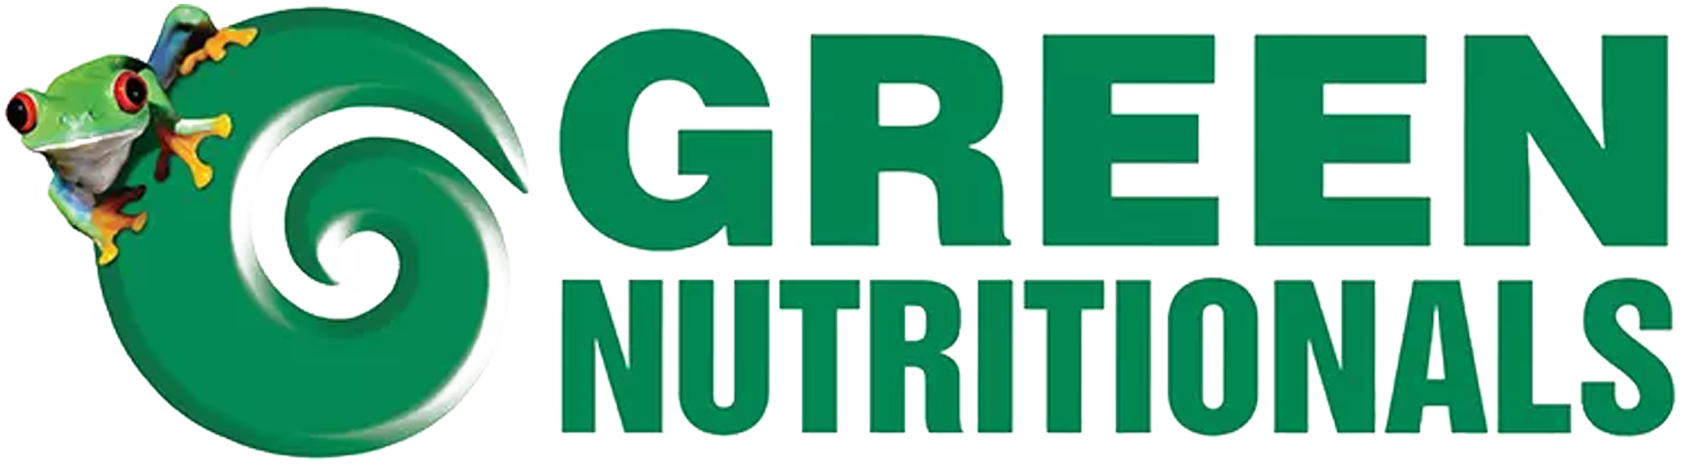 MicrOrganics Green Nutritionals Logo